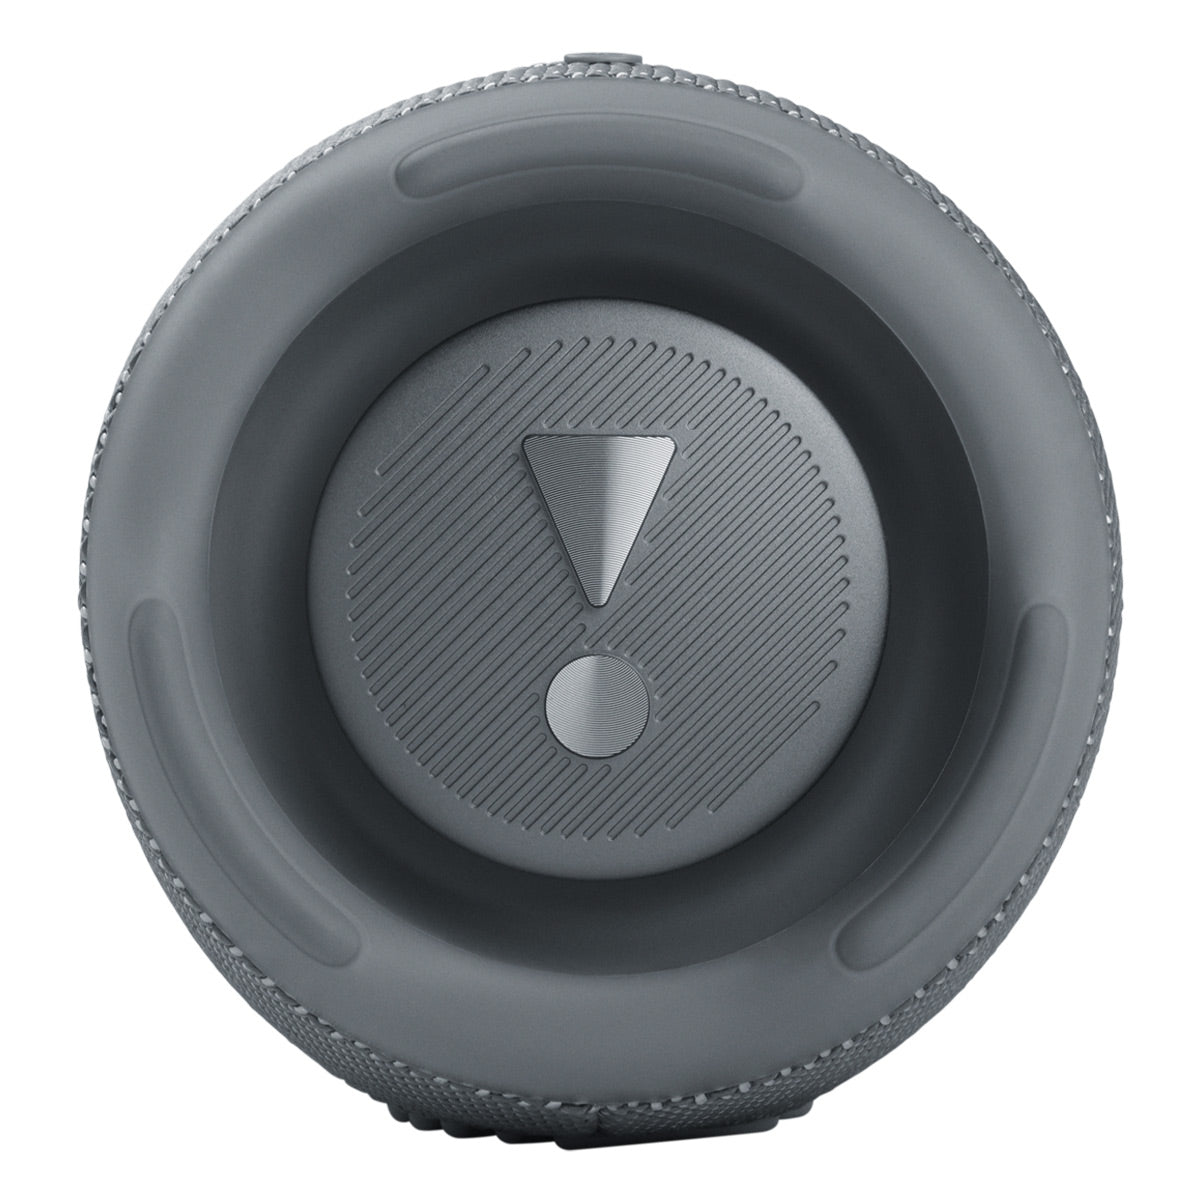 JBL Charge 5 Portable Waterproof Bluetooth Speaker with Powerbank (Gray)